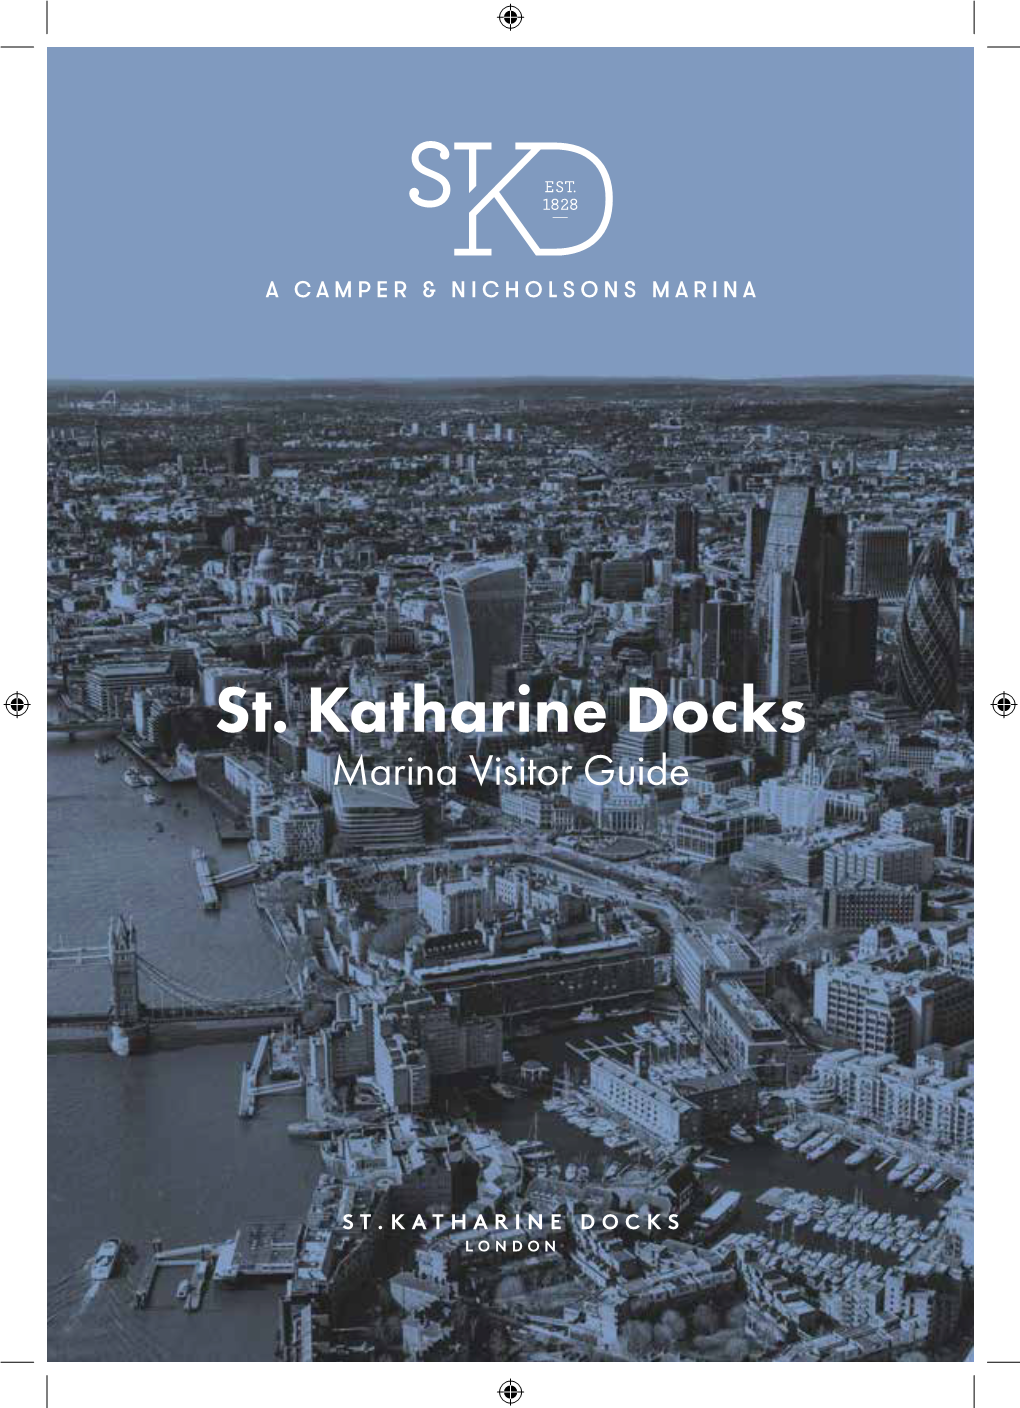 St Katharine Docks in London